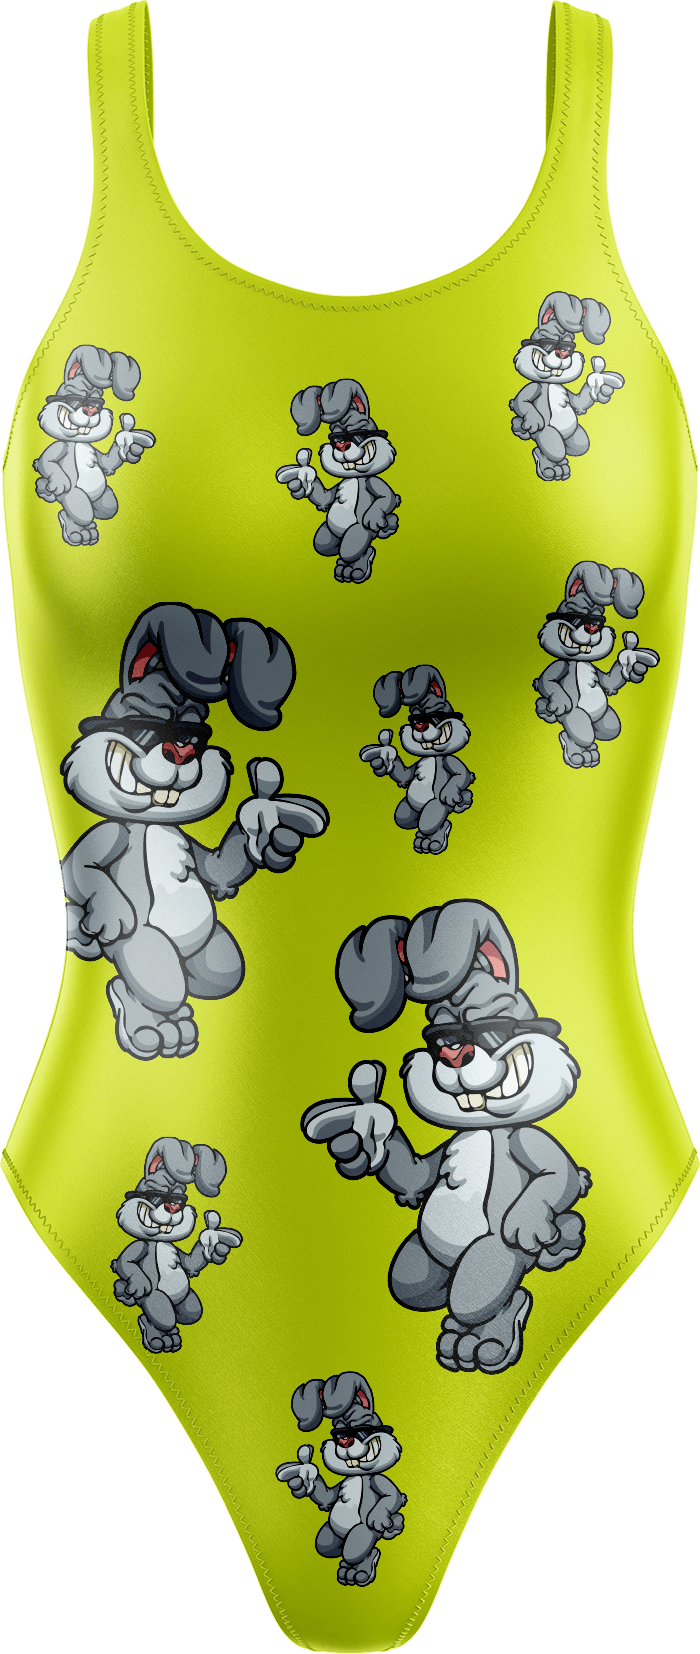 Rogue Rabbit Swimsuits - fungear.com.au